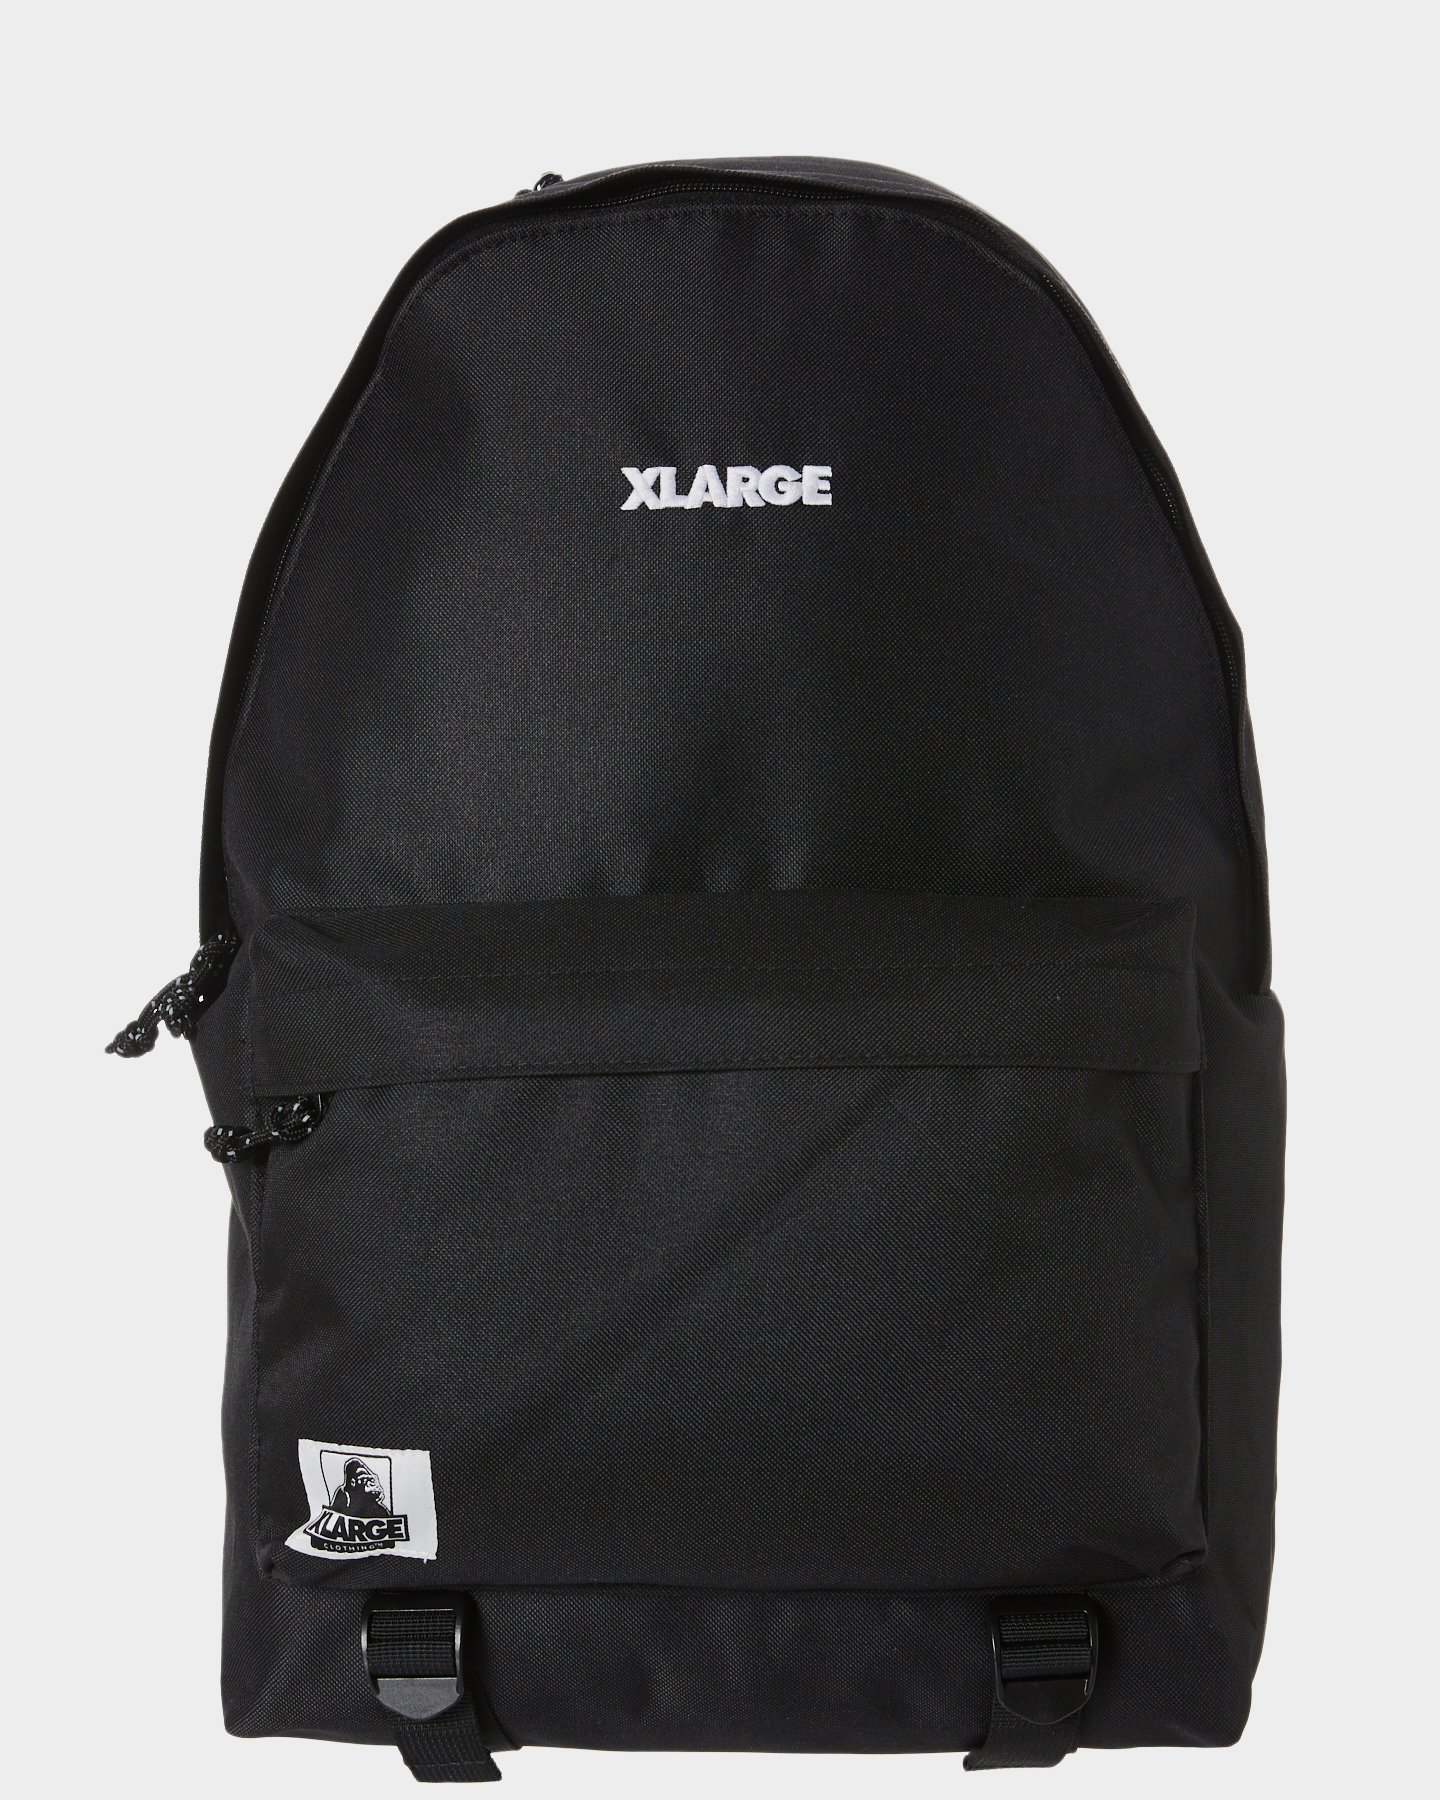 Xlarge 91 Backback - Black | SurfStitch